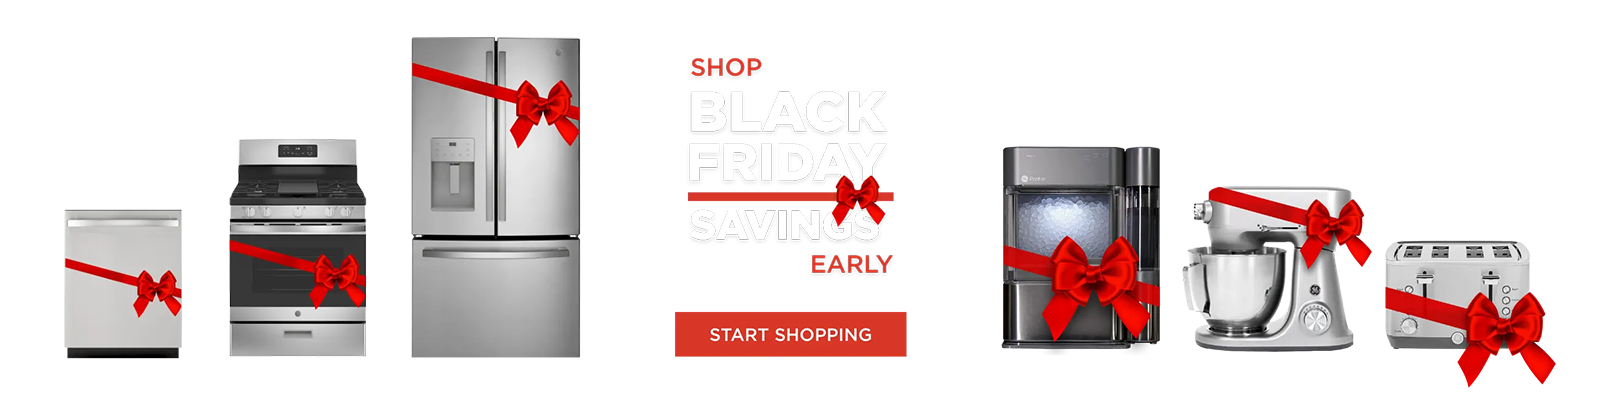 Shop Black Friday Savings Early